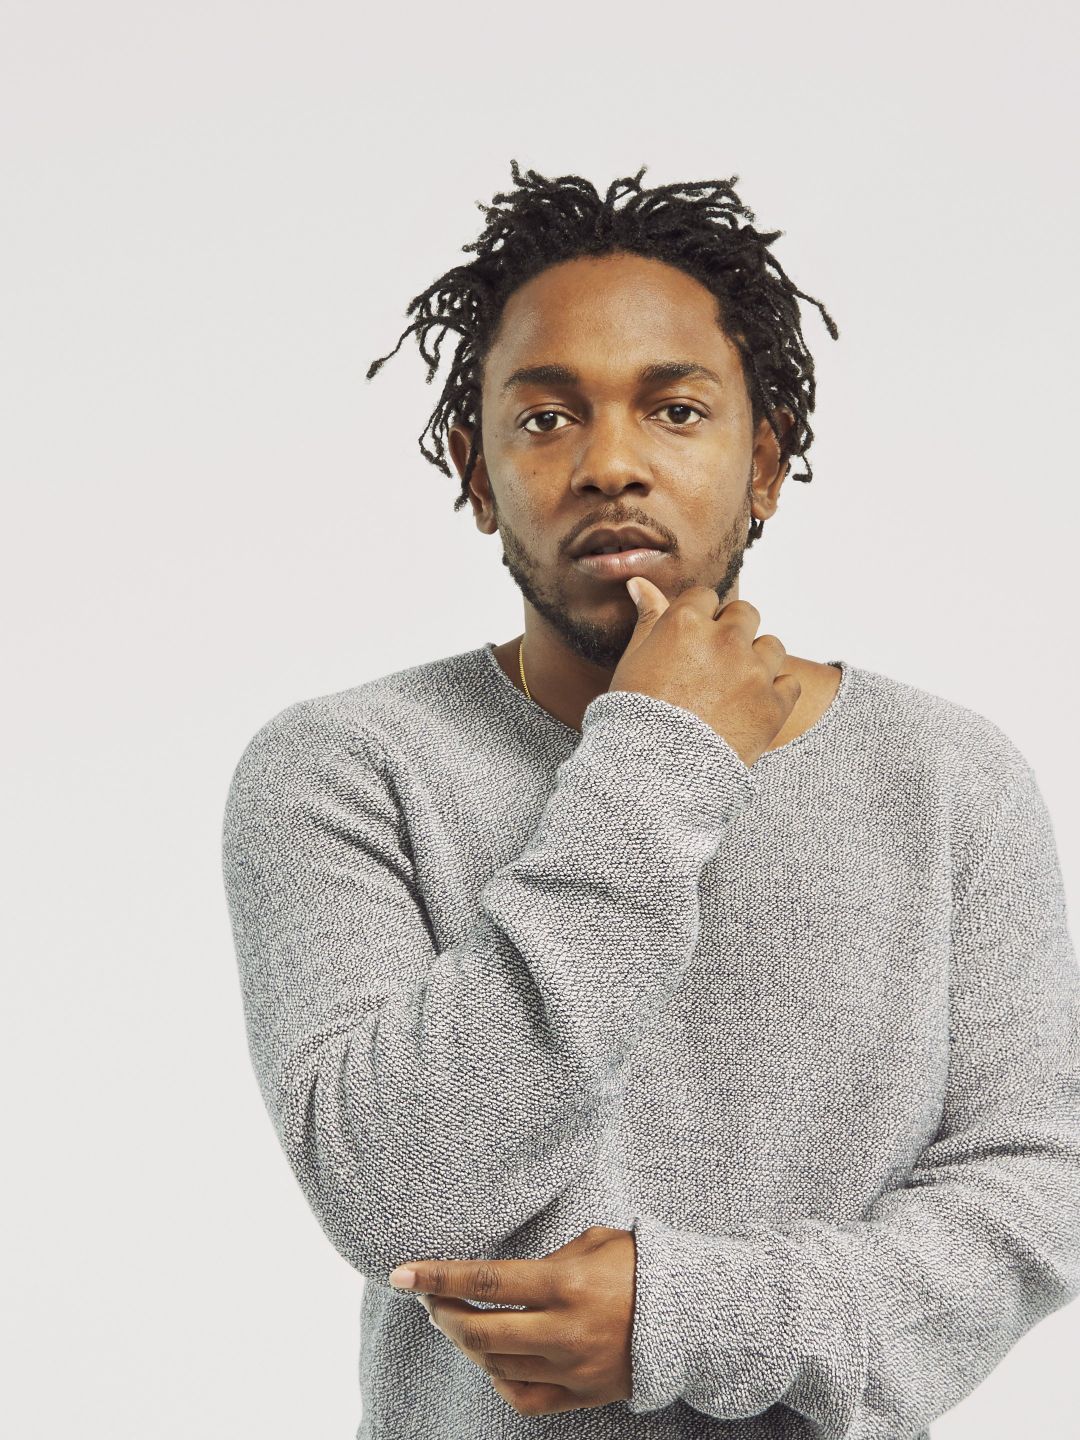 Kendrick Lamar who is he